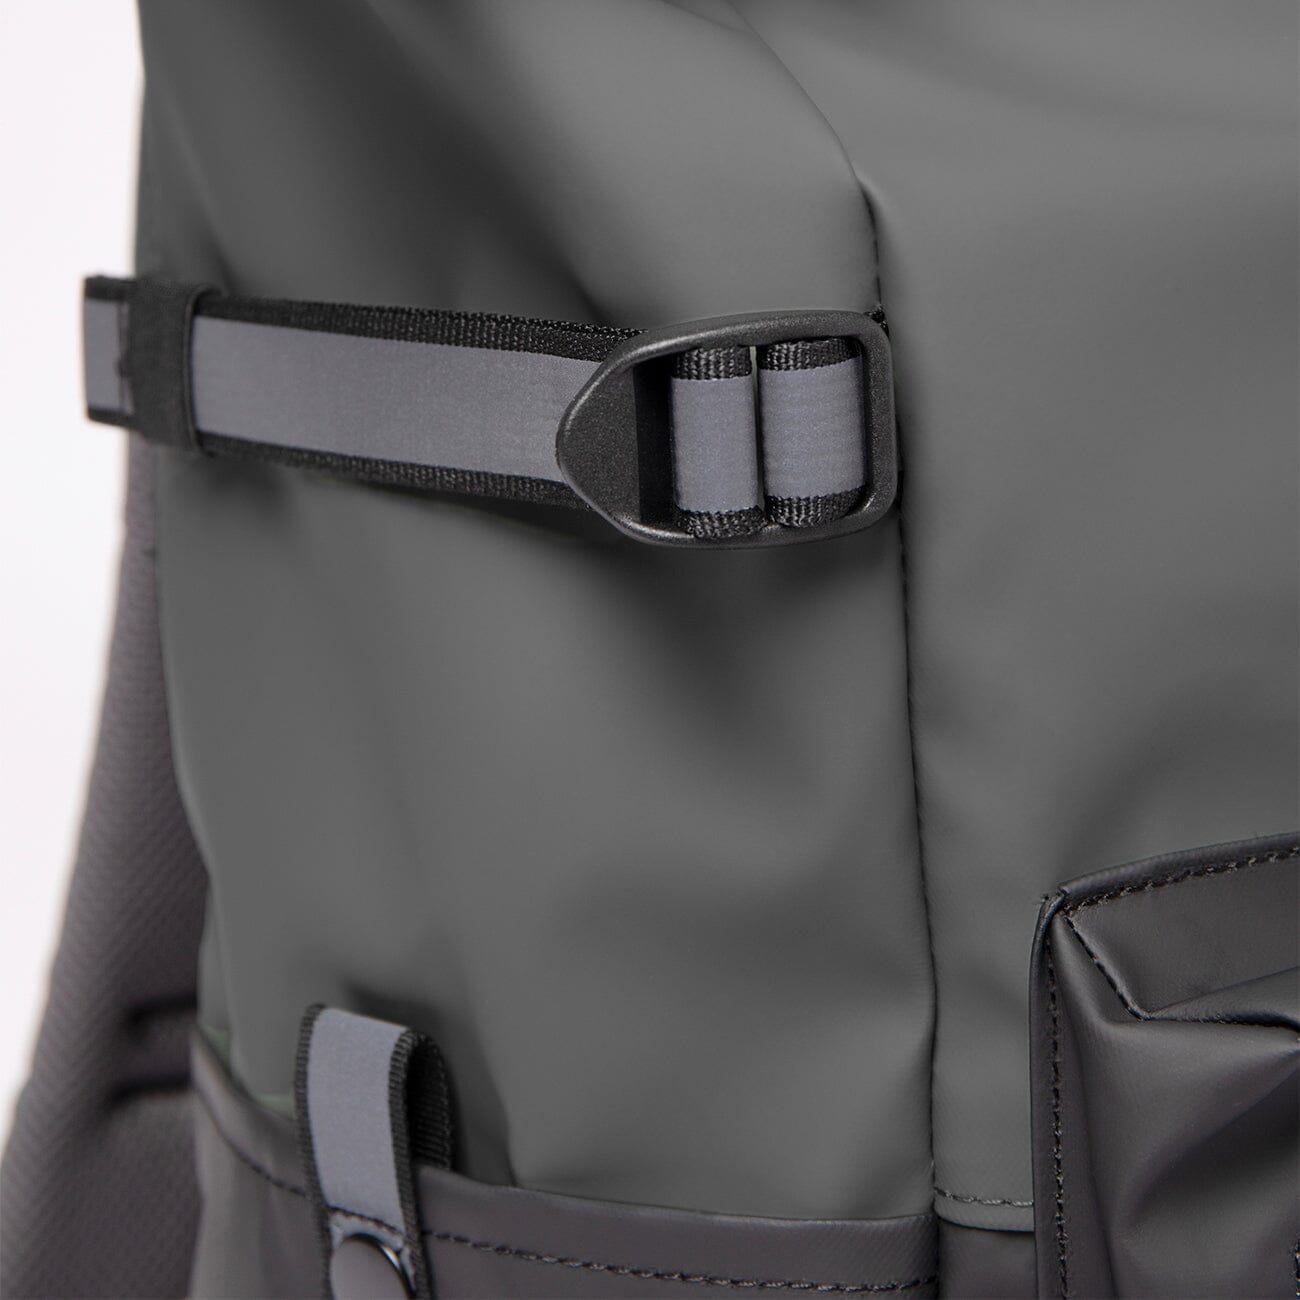 waterproof commuting backpack ruben 2 sandqvist side compression straps